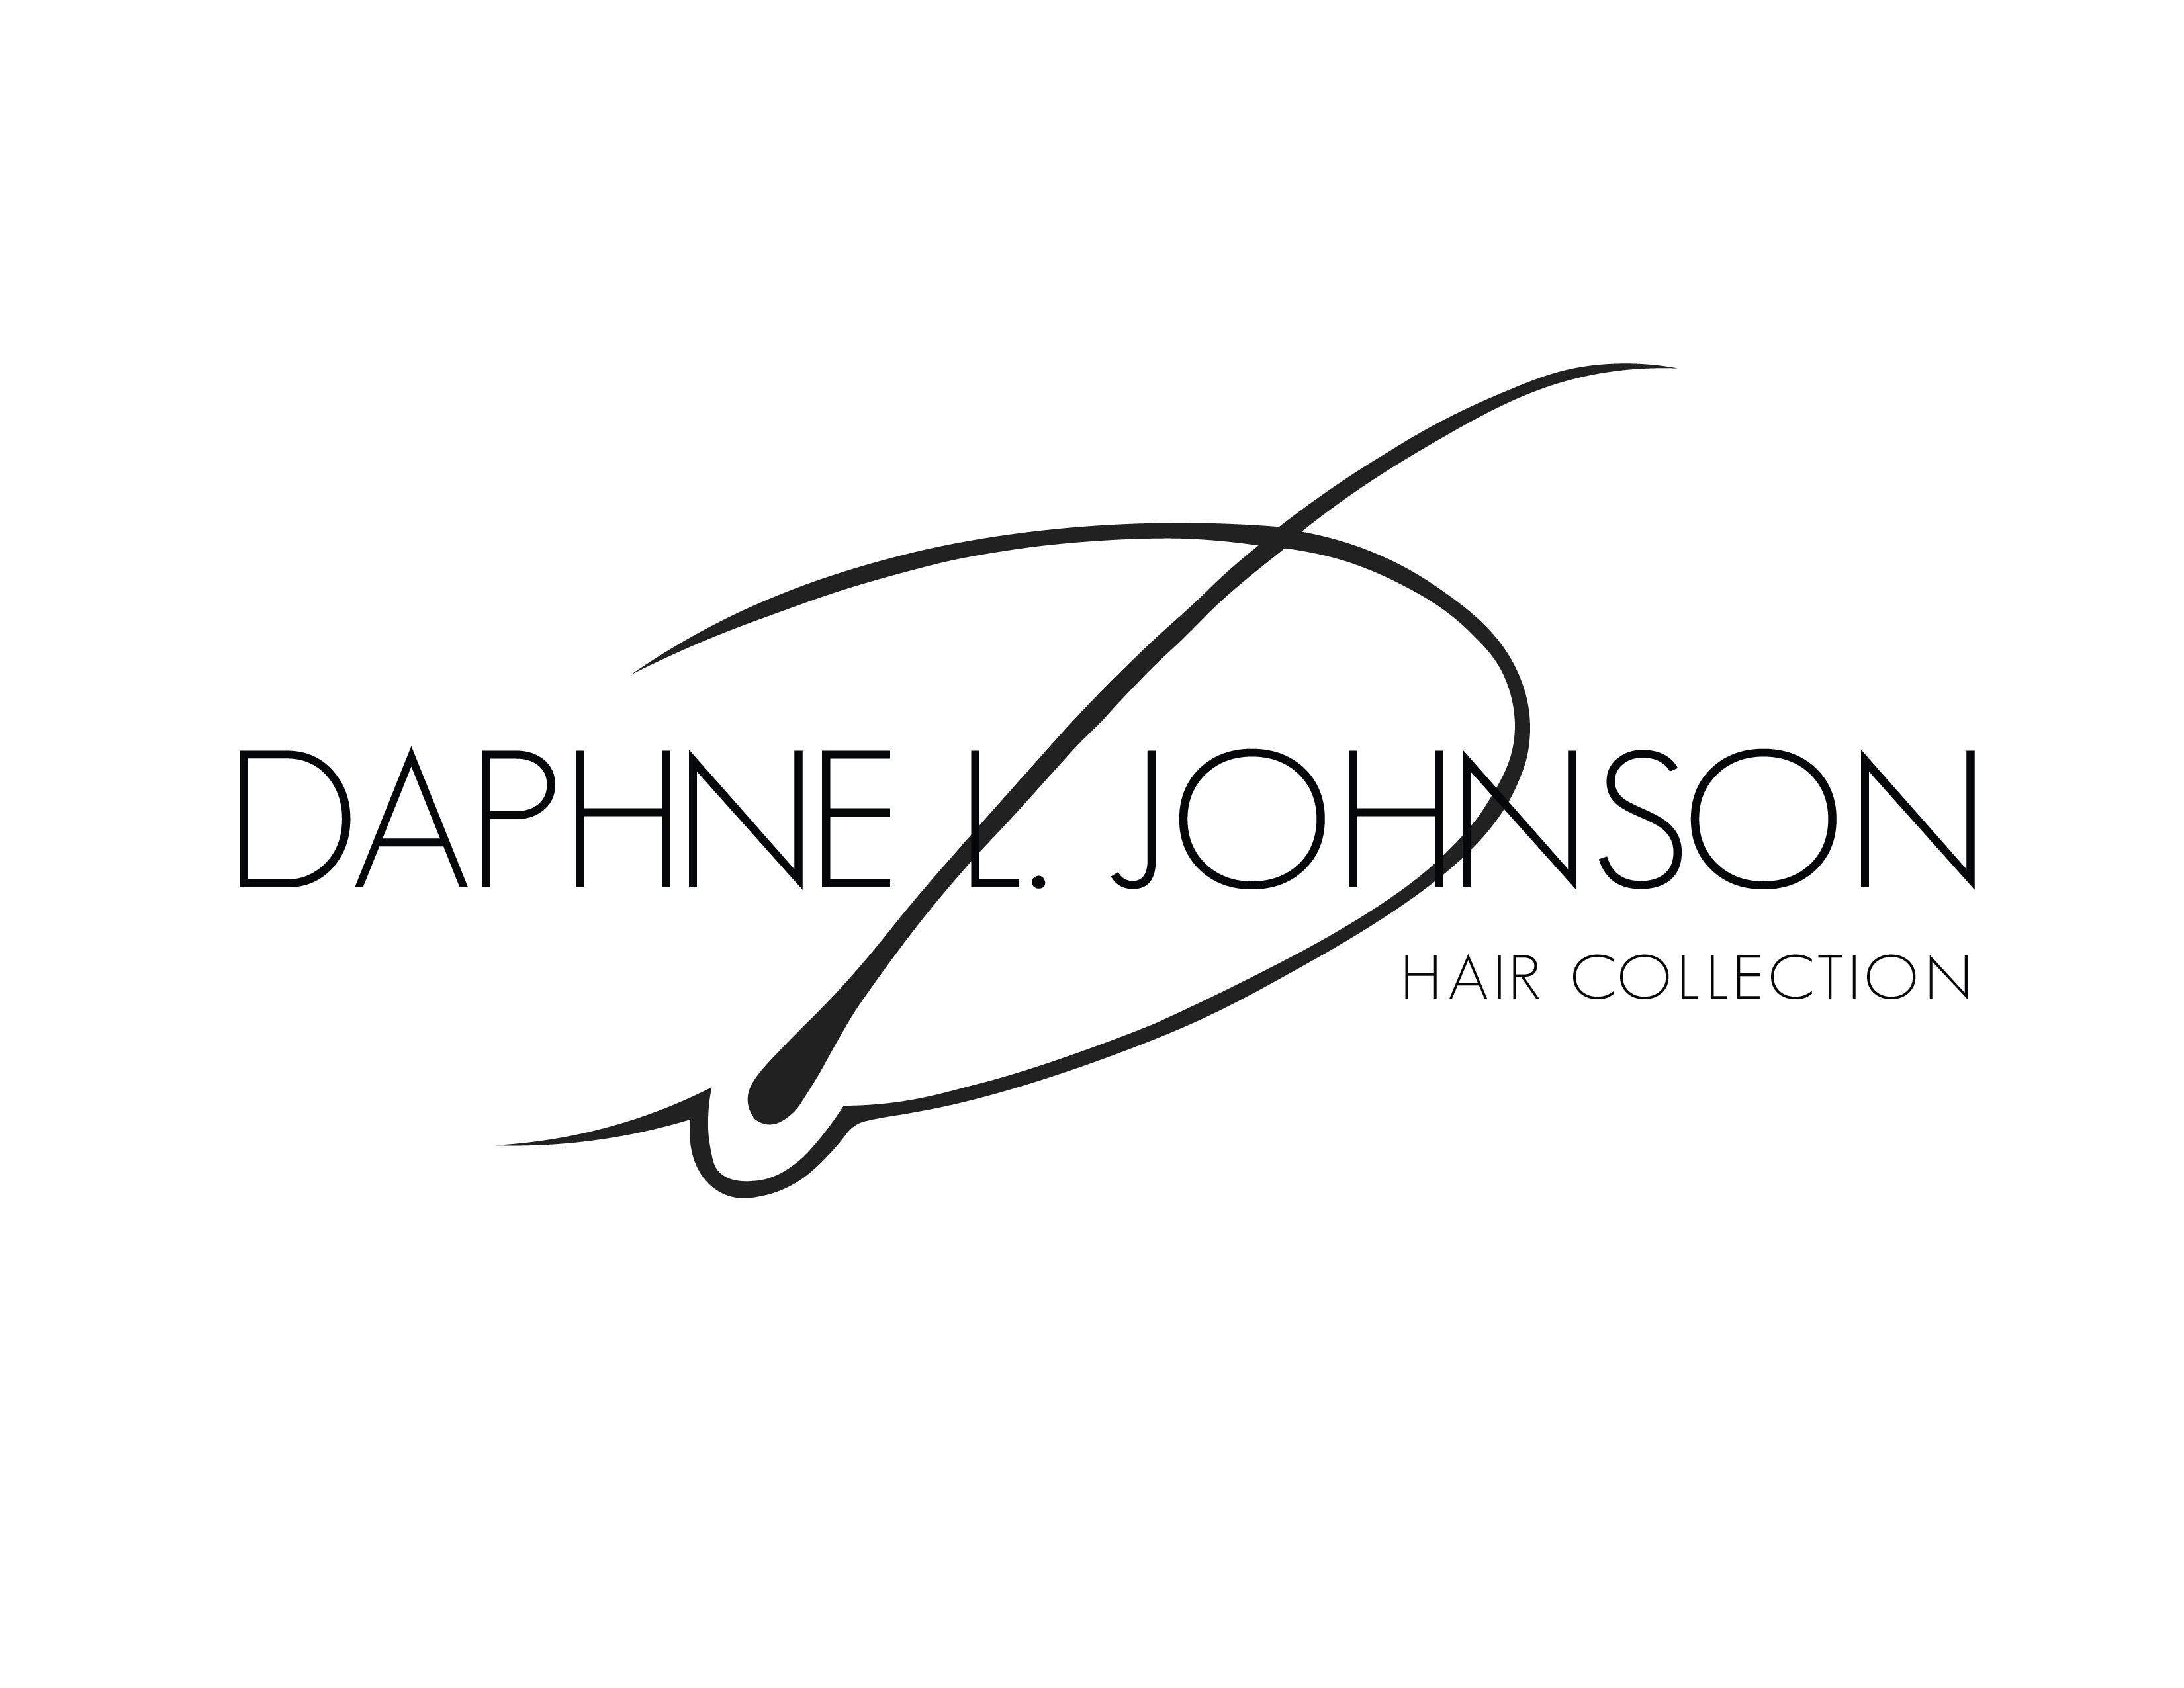 Daphne L Johnson Hair Collection